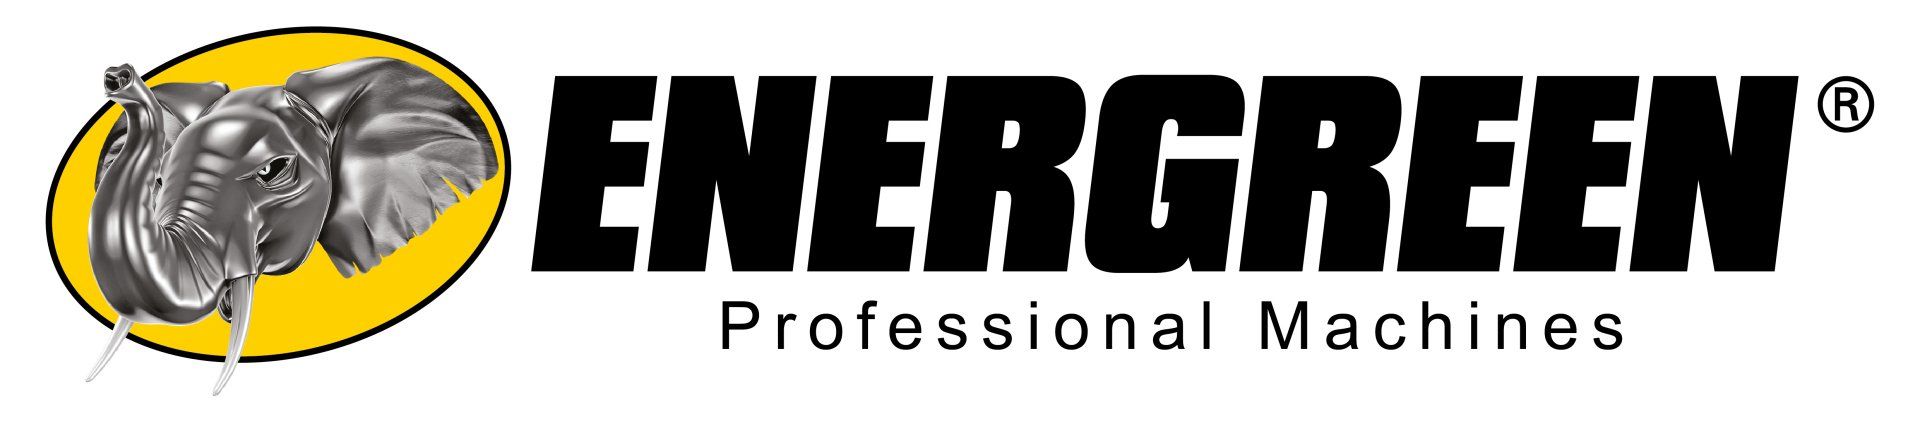 Energreen Robo Power Units logo